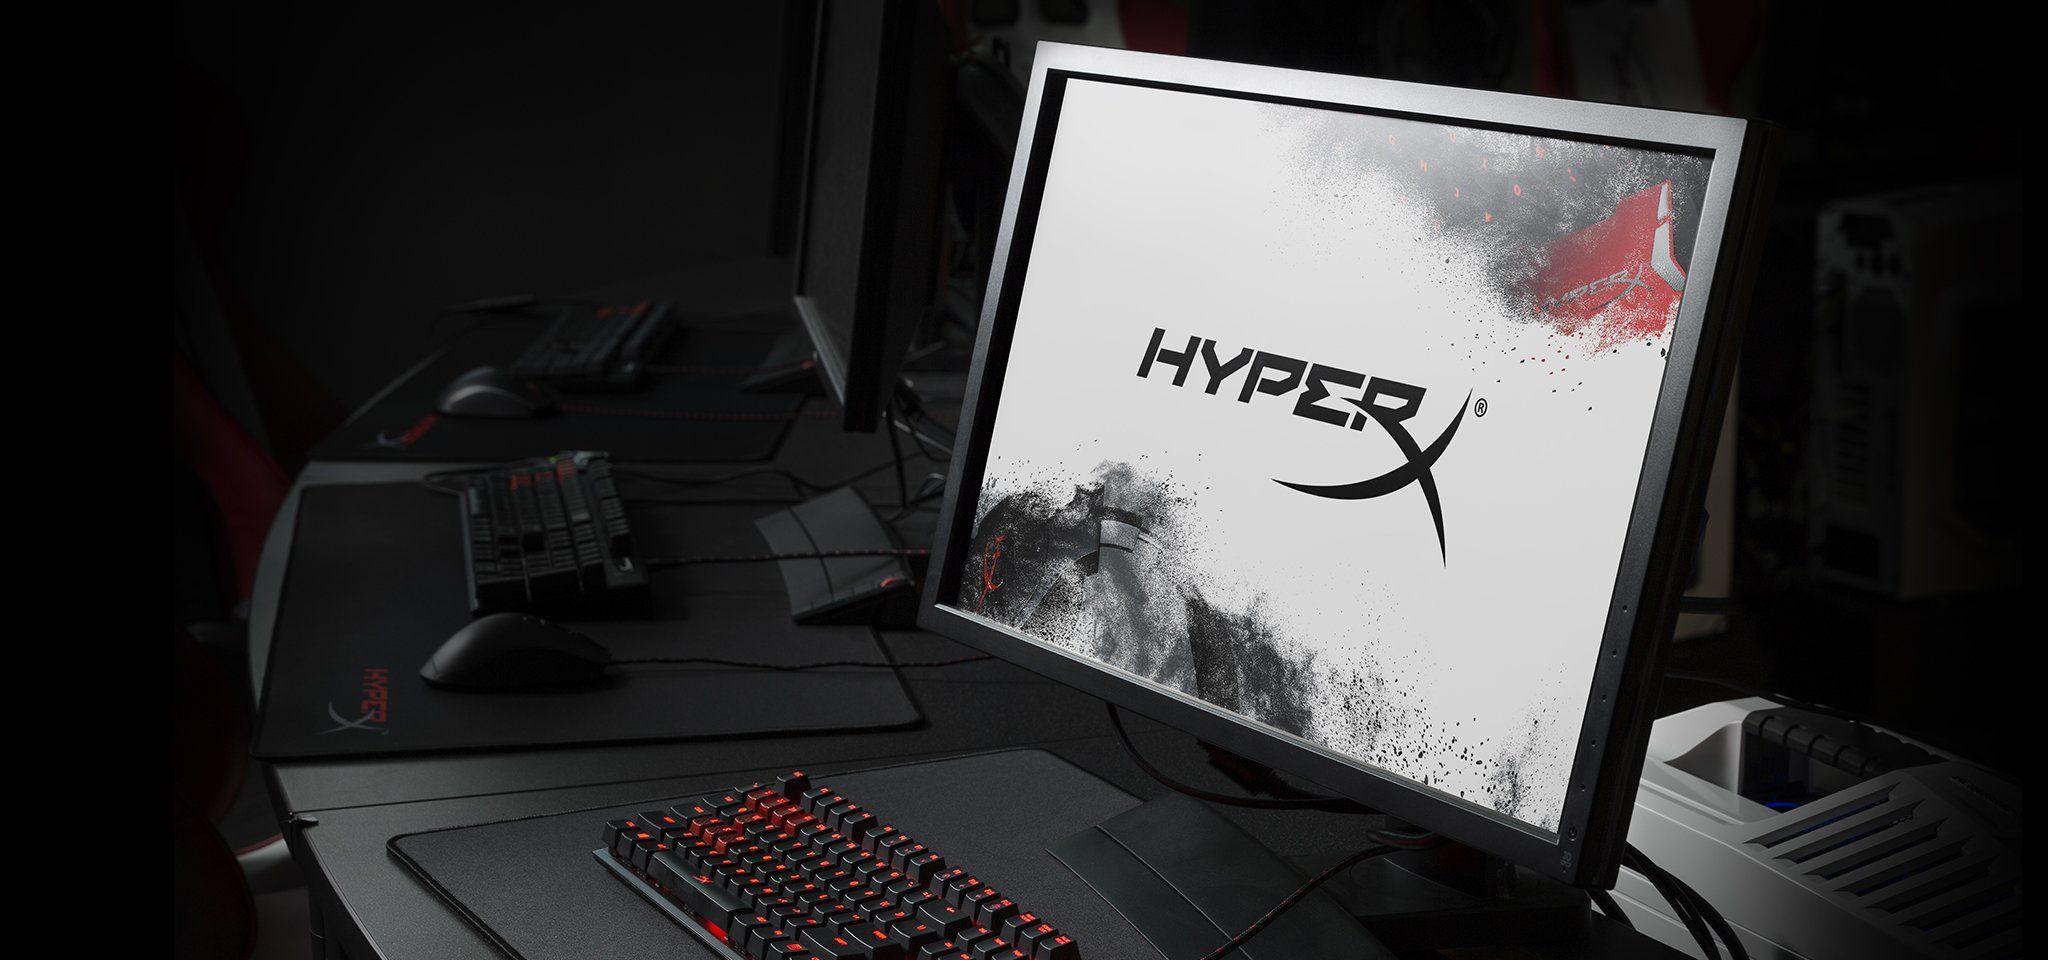 HyperX Wallpaper Download Page